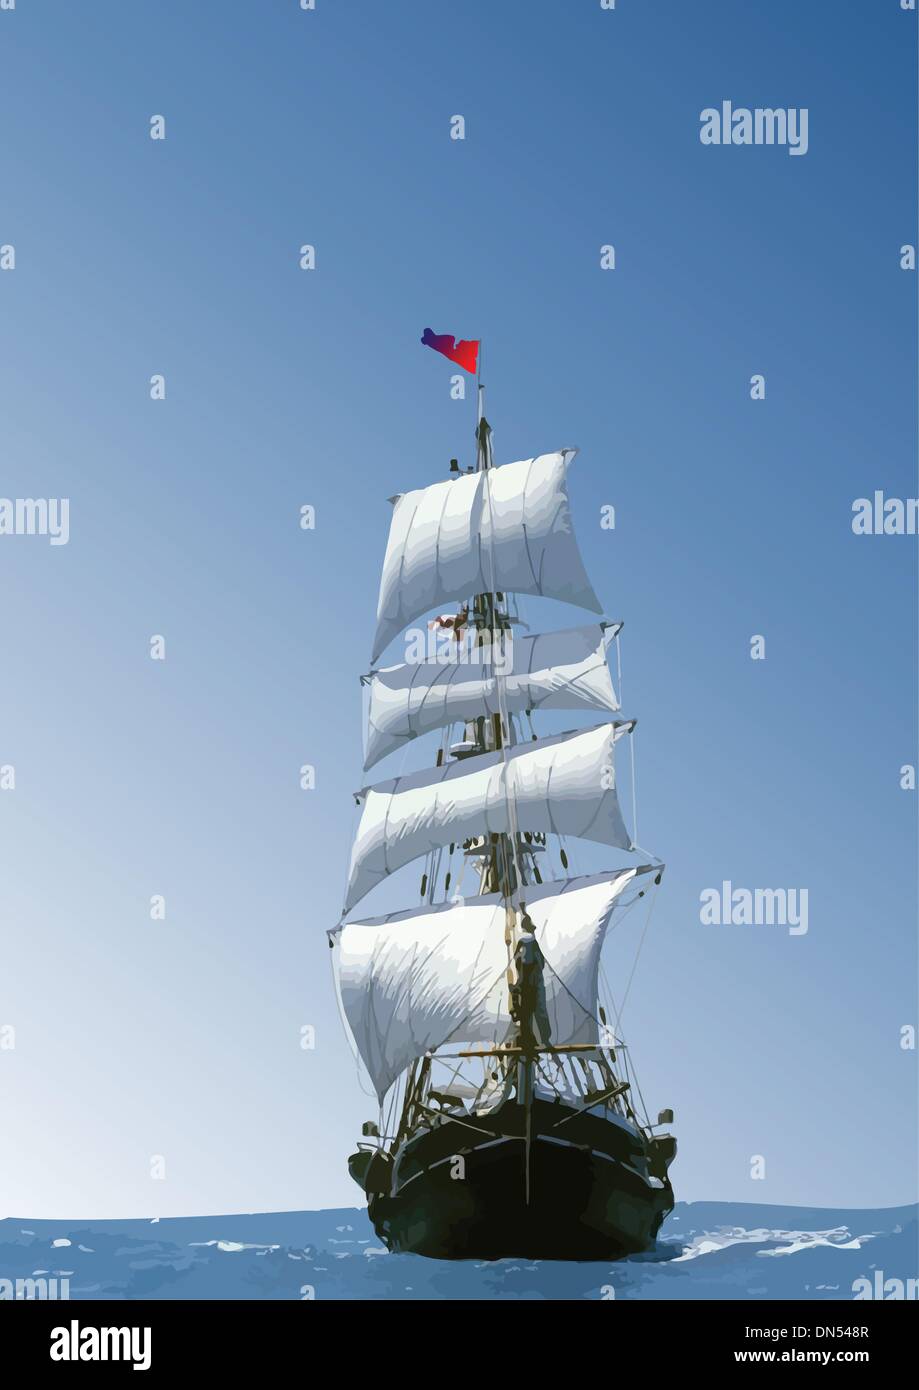 Marine Hintergrund mit Segelschiff. Vektor-illustration Stock Vektor